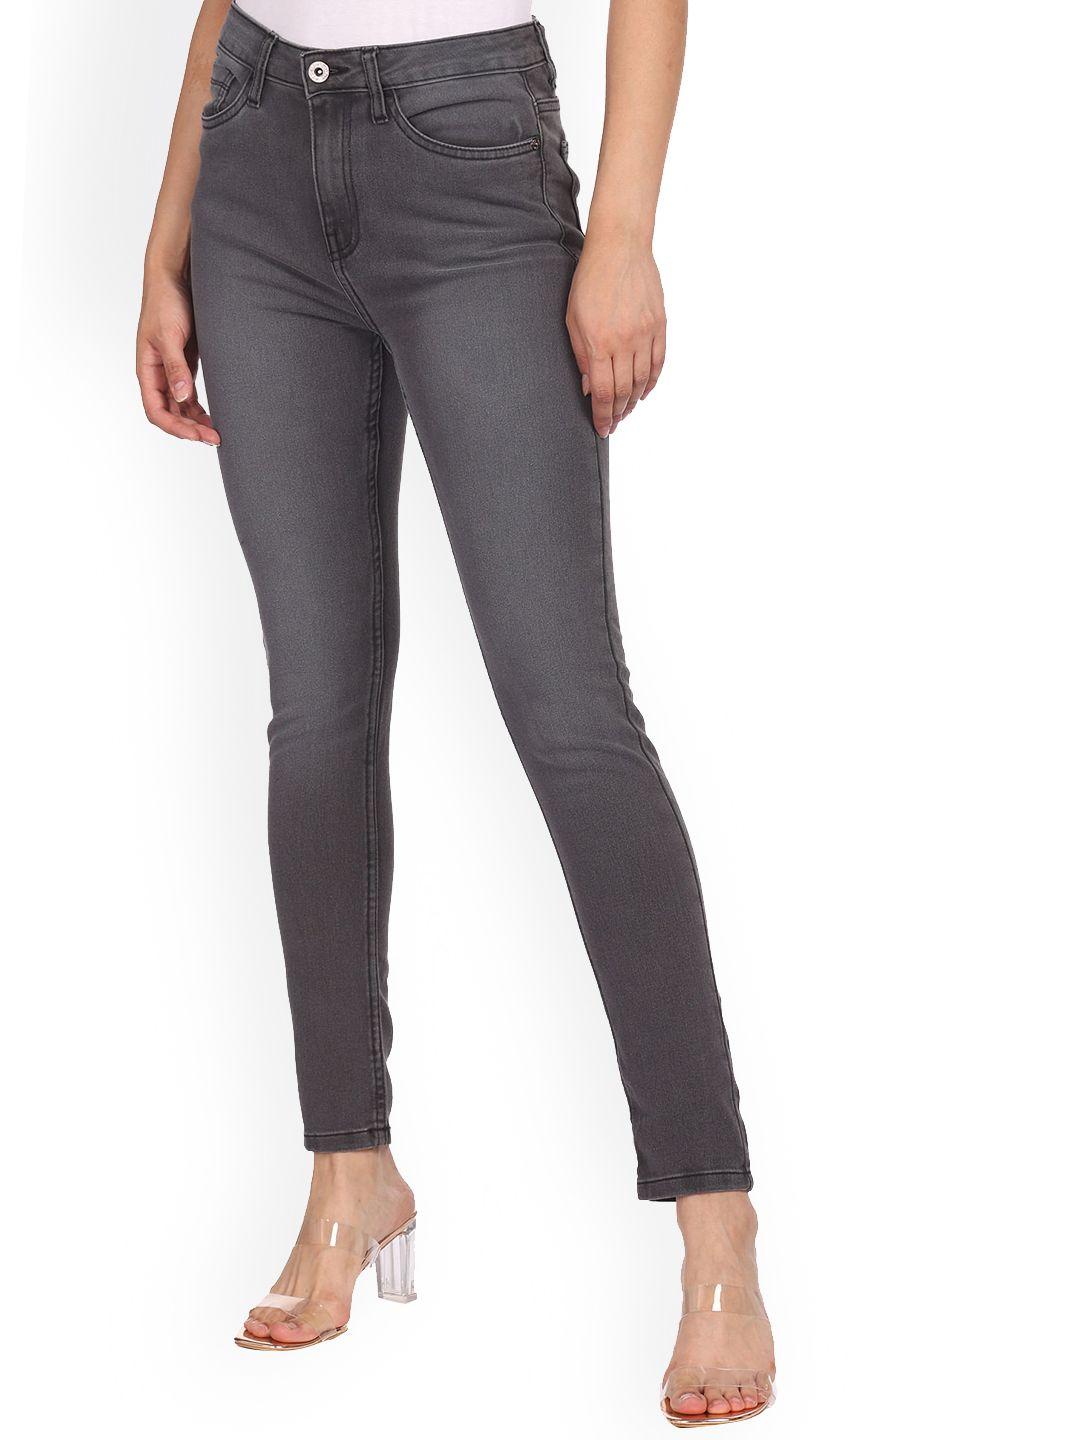 sugr grey regular fit cropped jeans